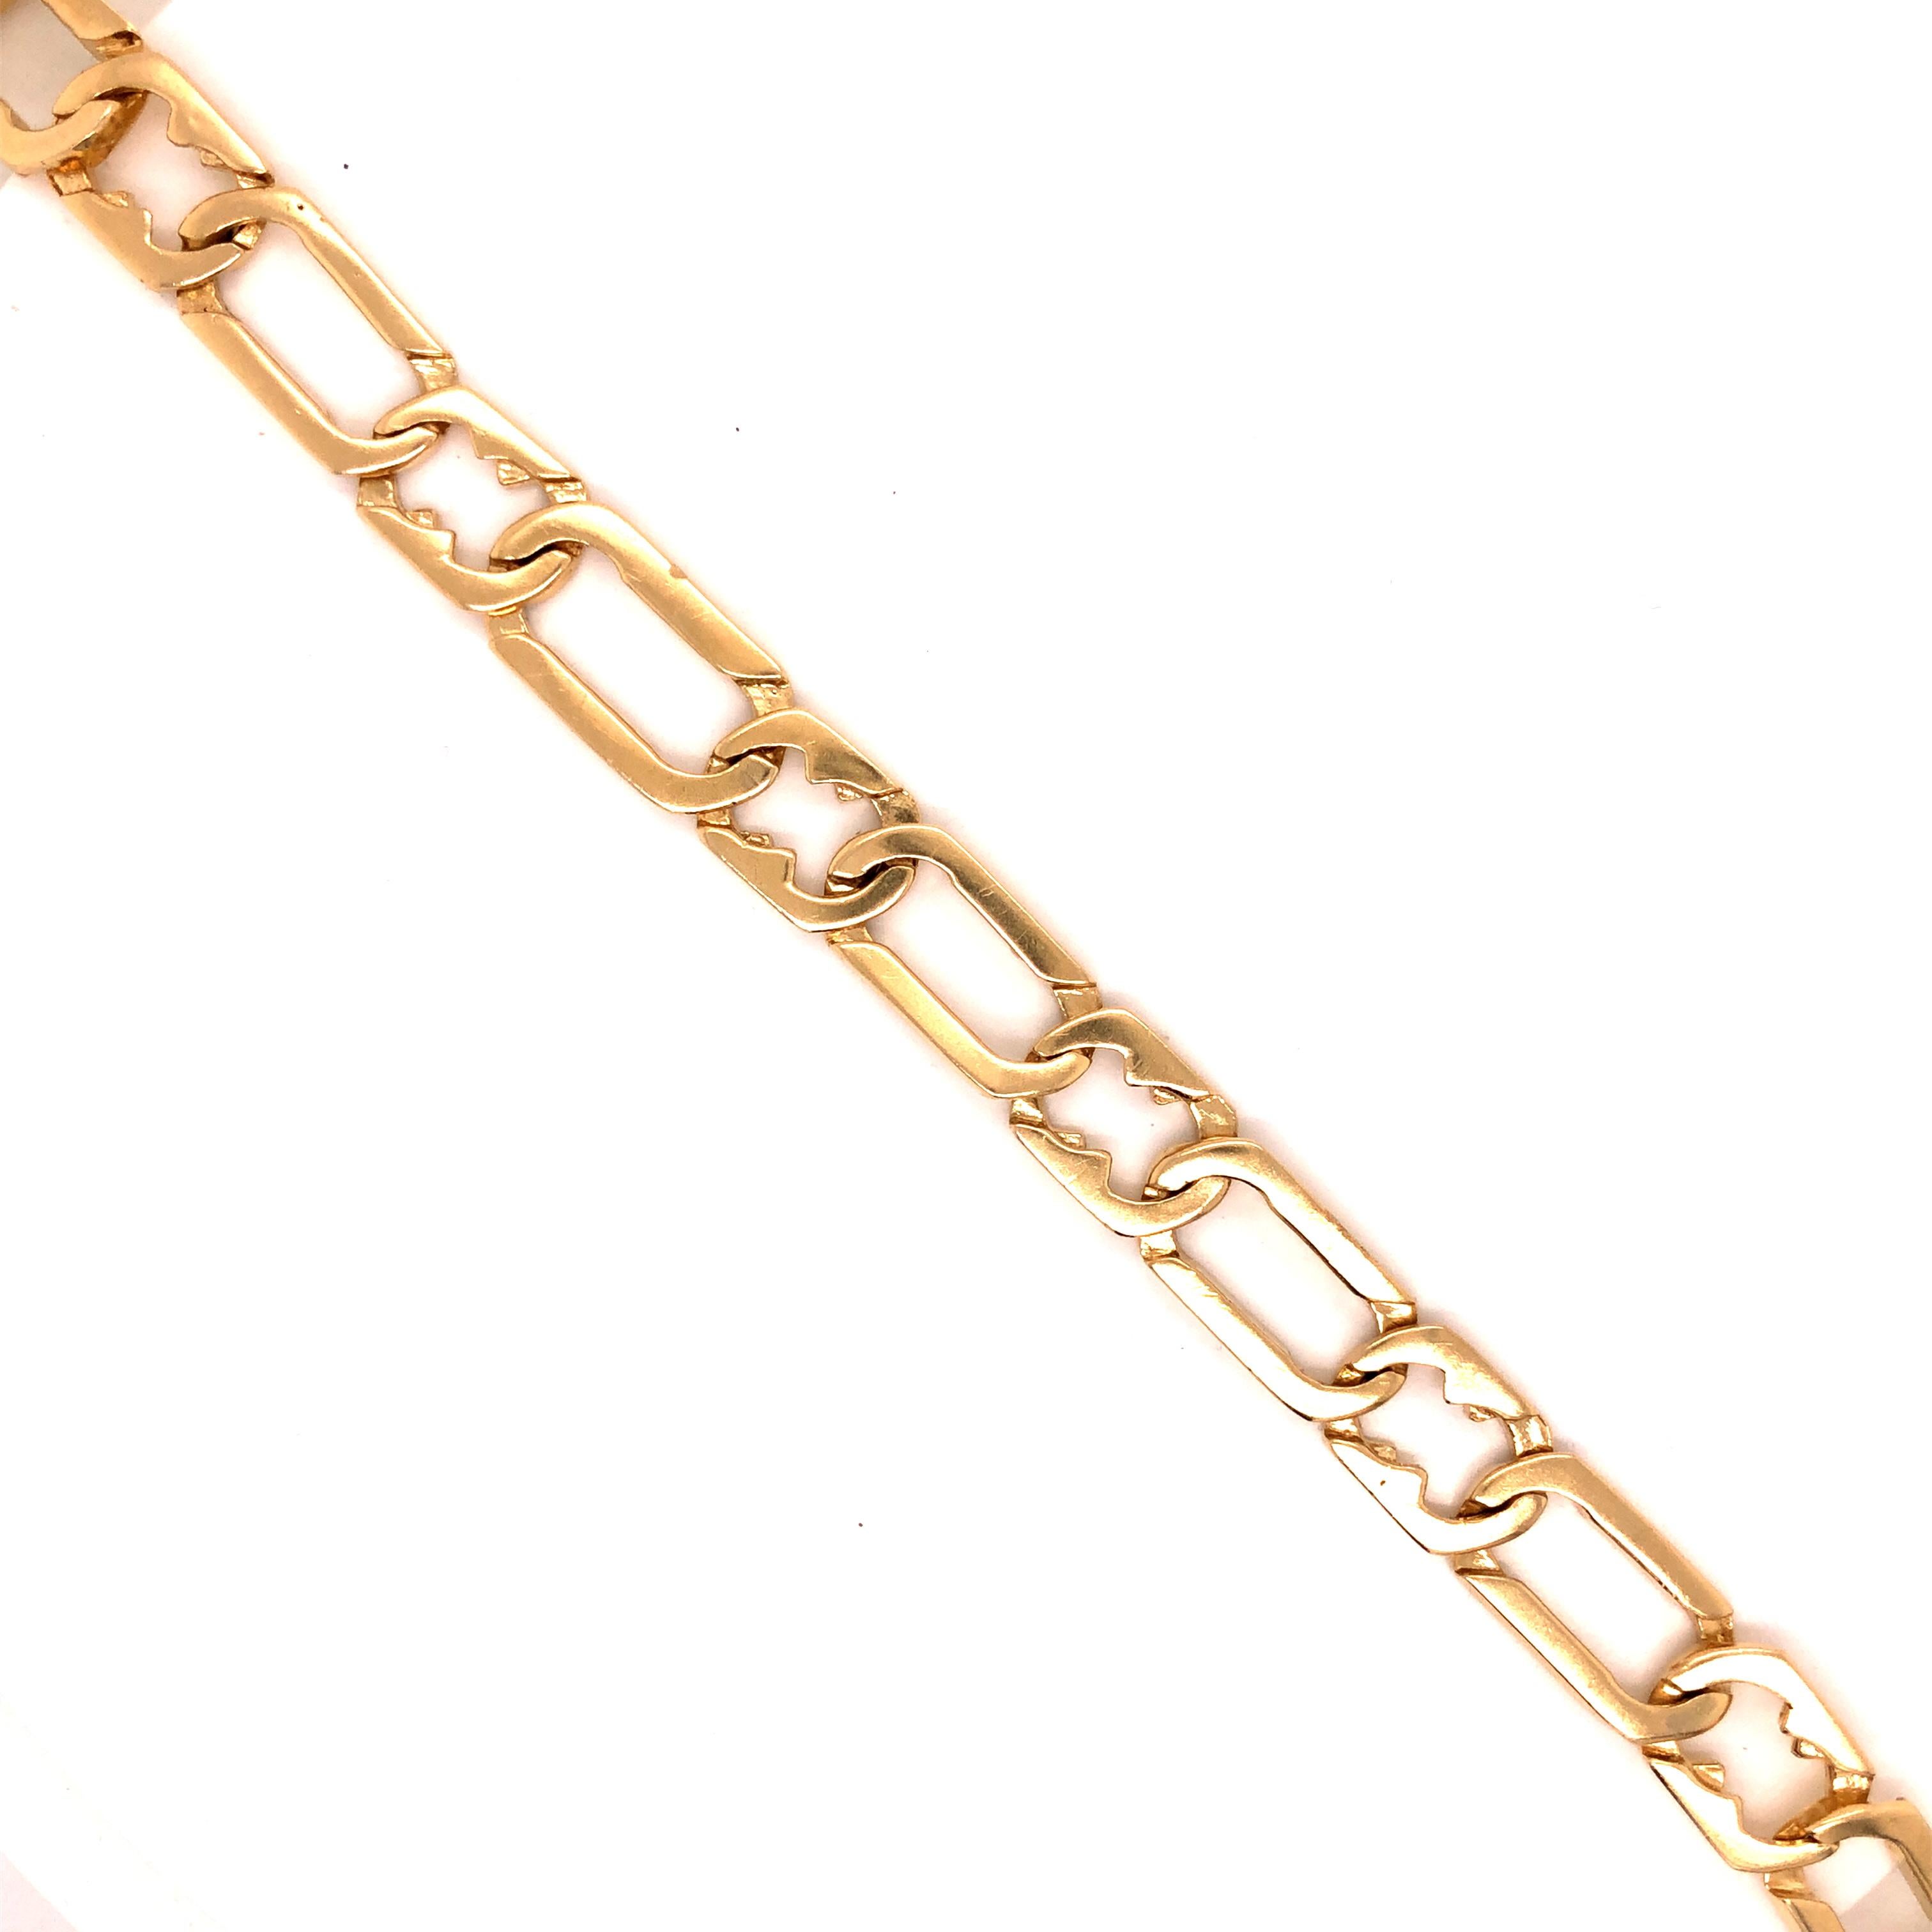 14K Gold Fancy Link Bracelet

Metal: 14K Yellow Gold

Size: 8 Length, 10.1 mm

Total Weight: 32.5 grams